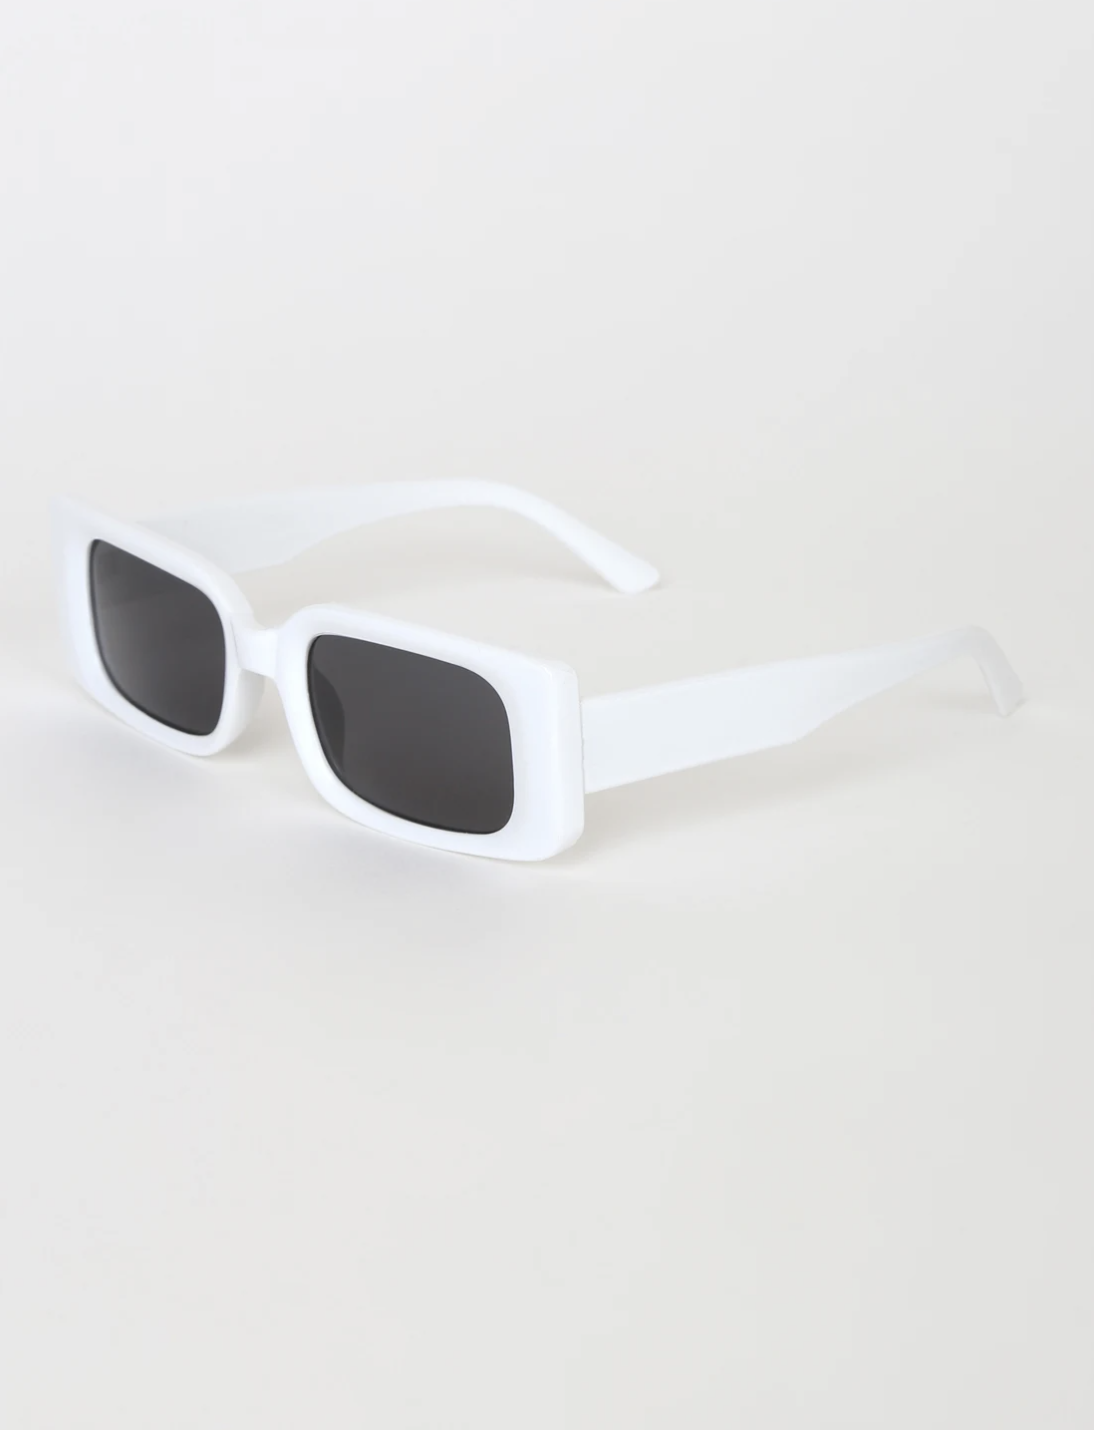 A La Mod Rectangle Sunglasses